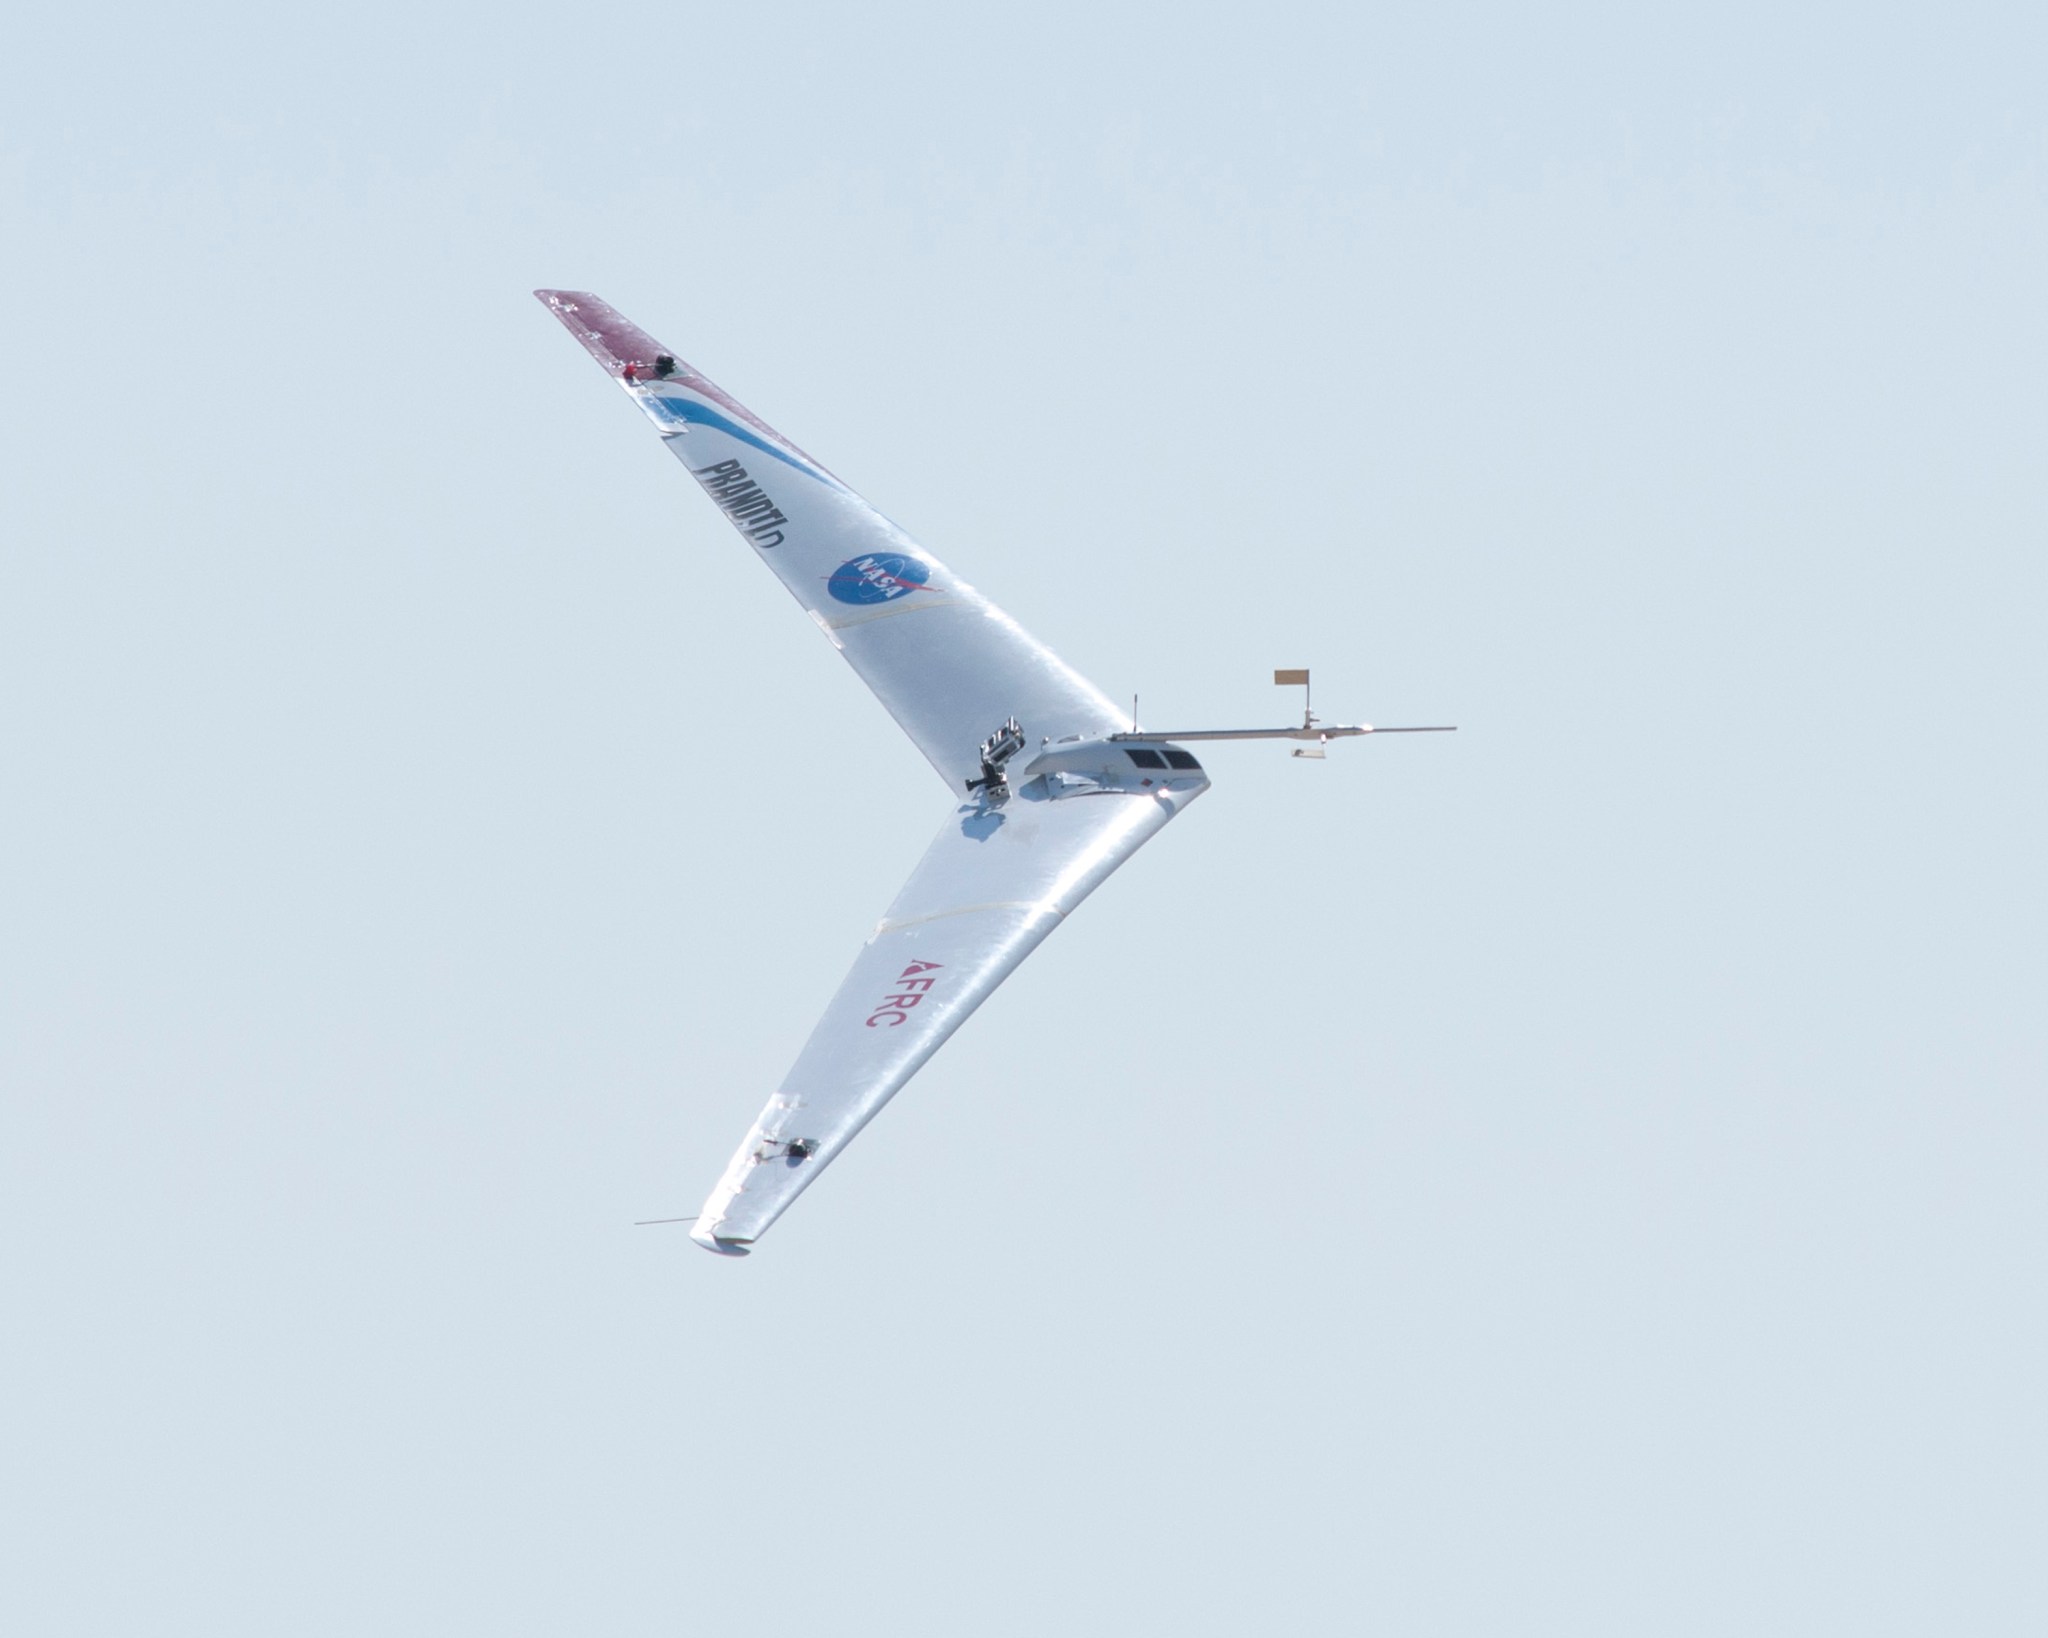 The Prandtl-d makes a test flight in 2014.